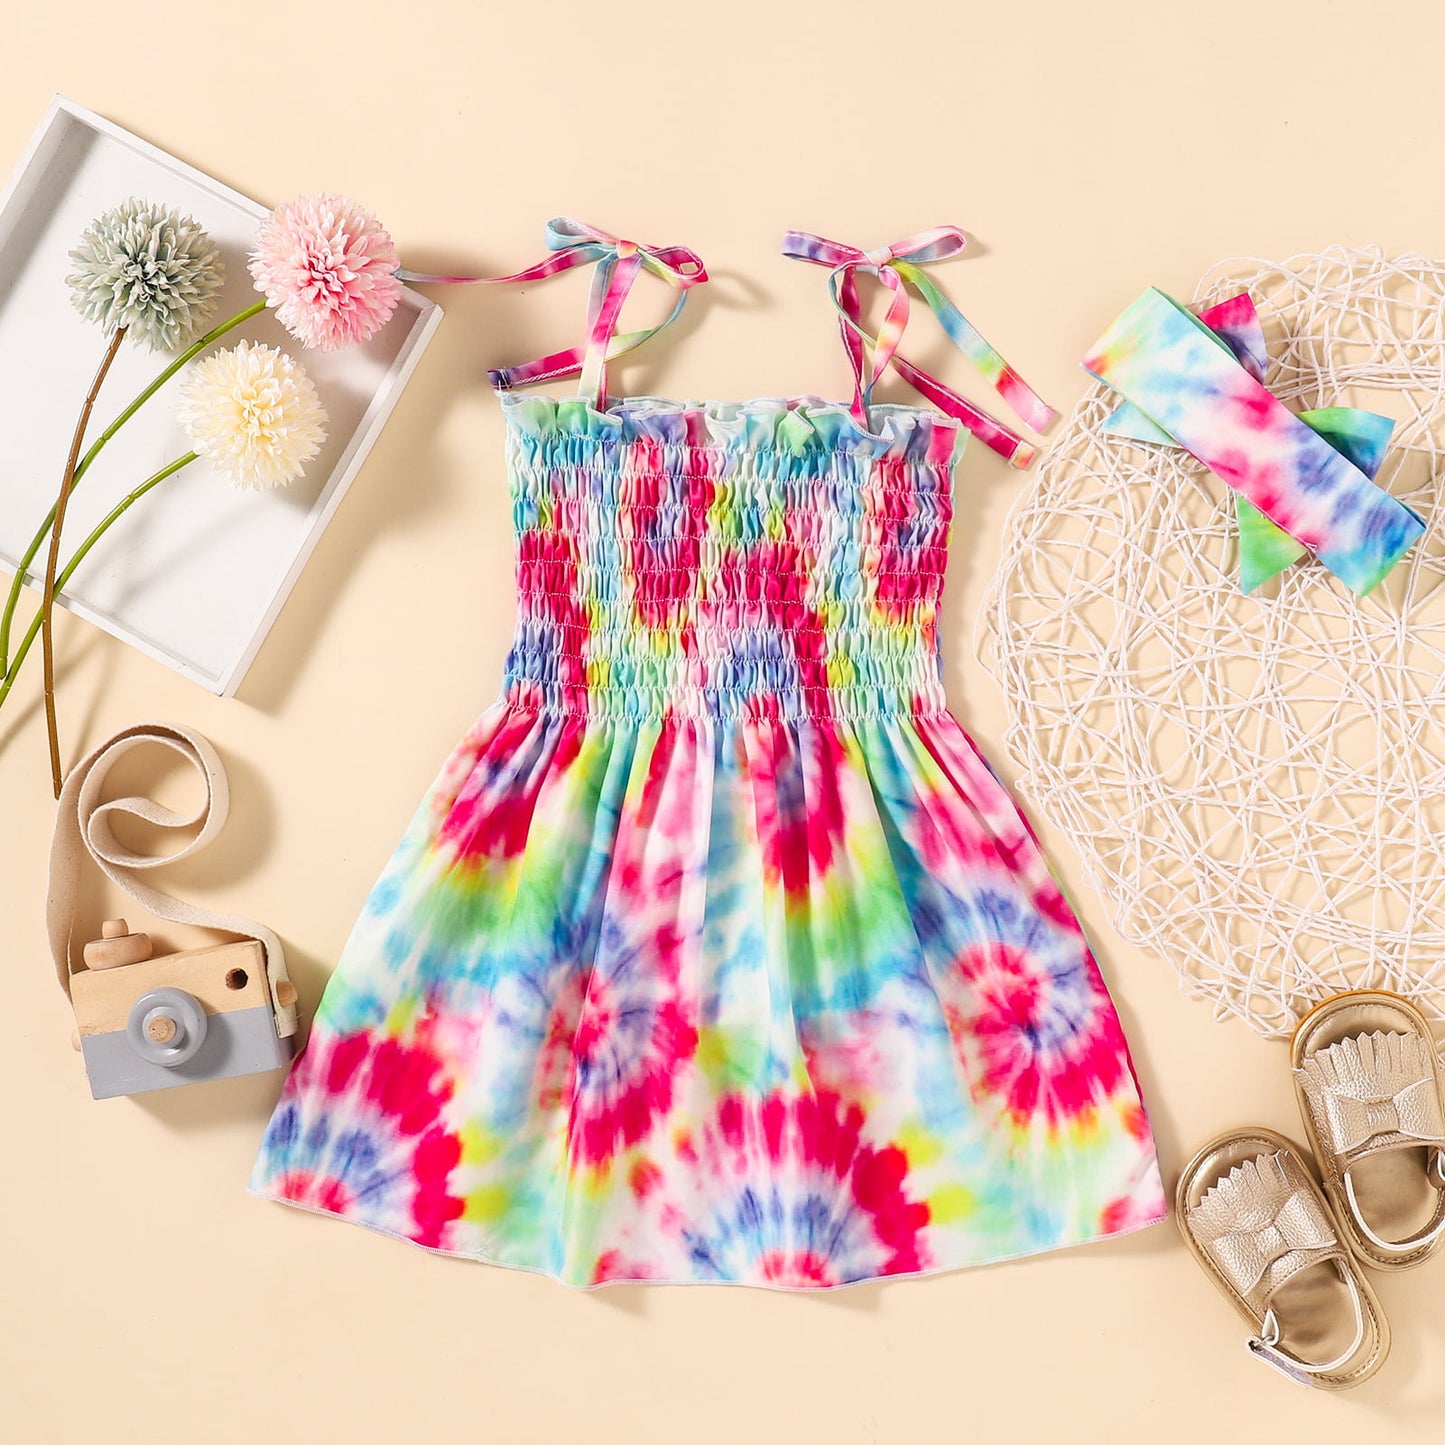 Uylee’s Boutique Tie-Dye Smocked Tie-Shoulder Dress